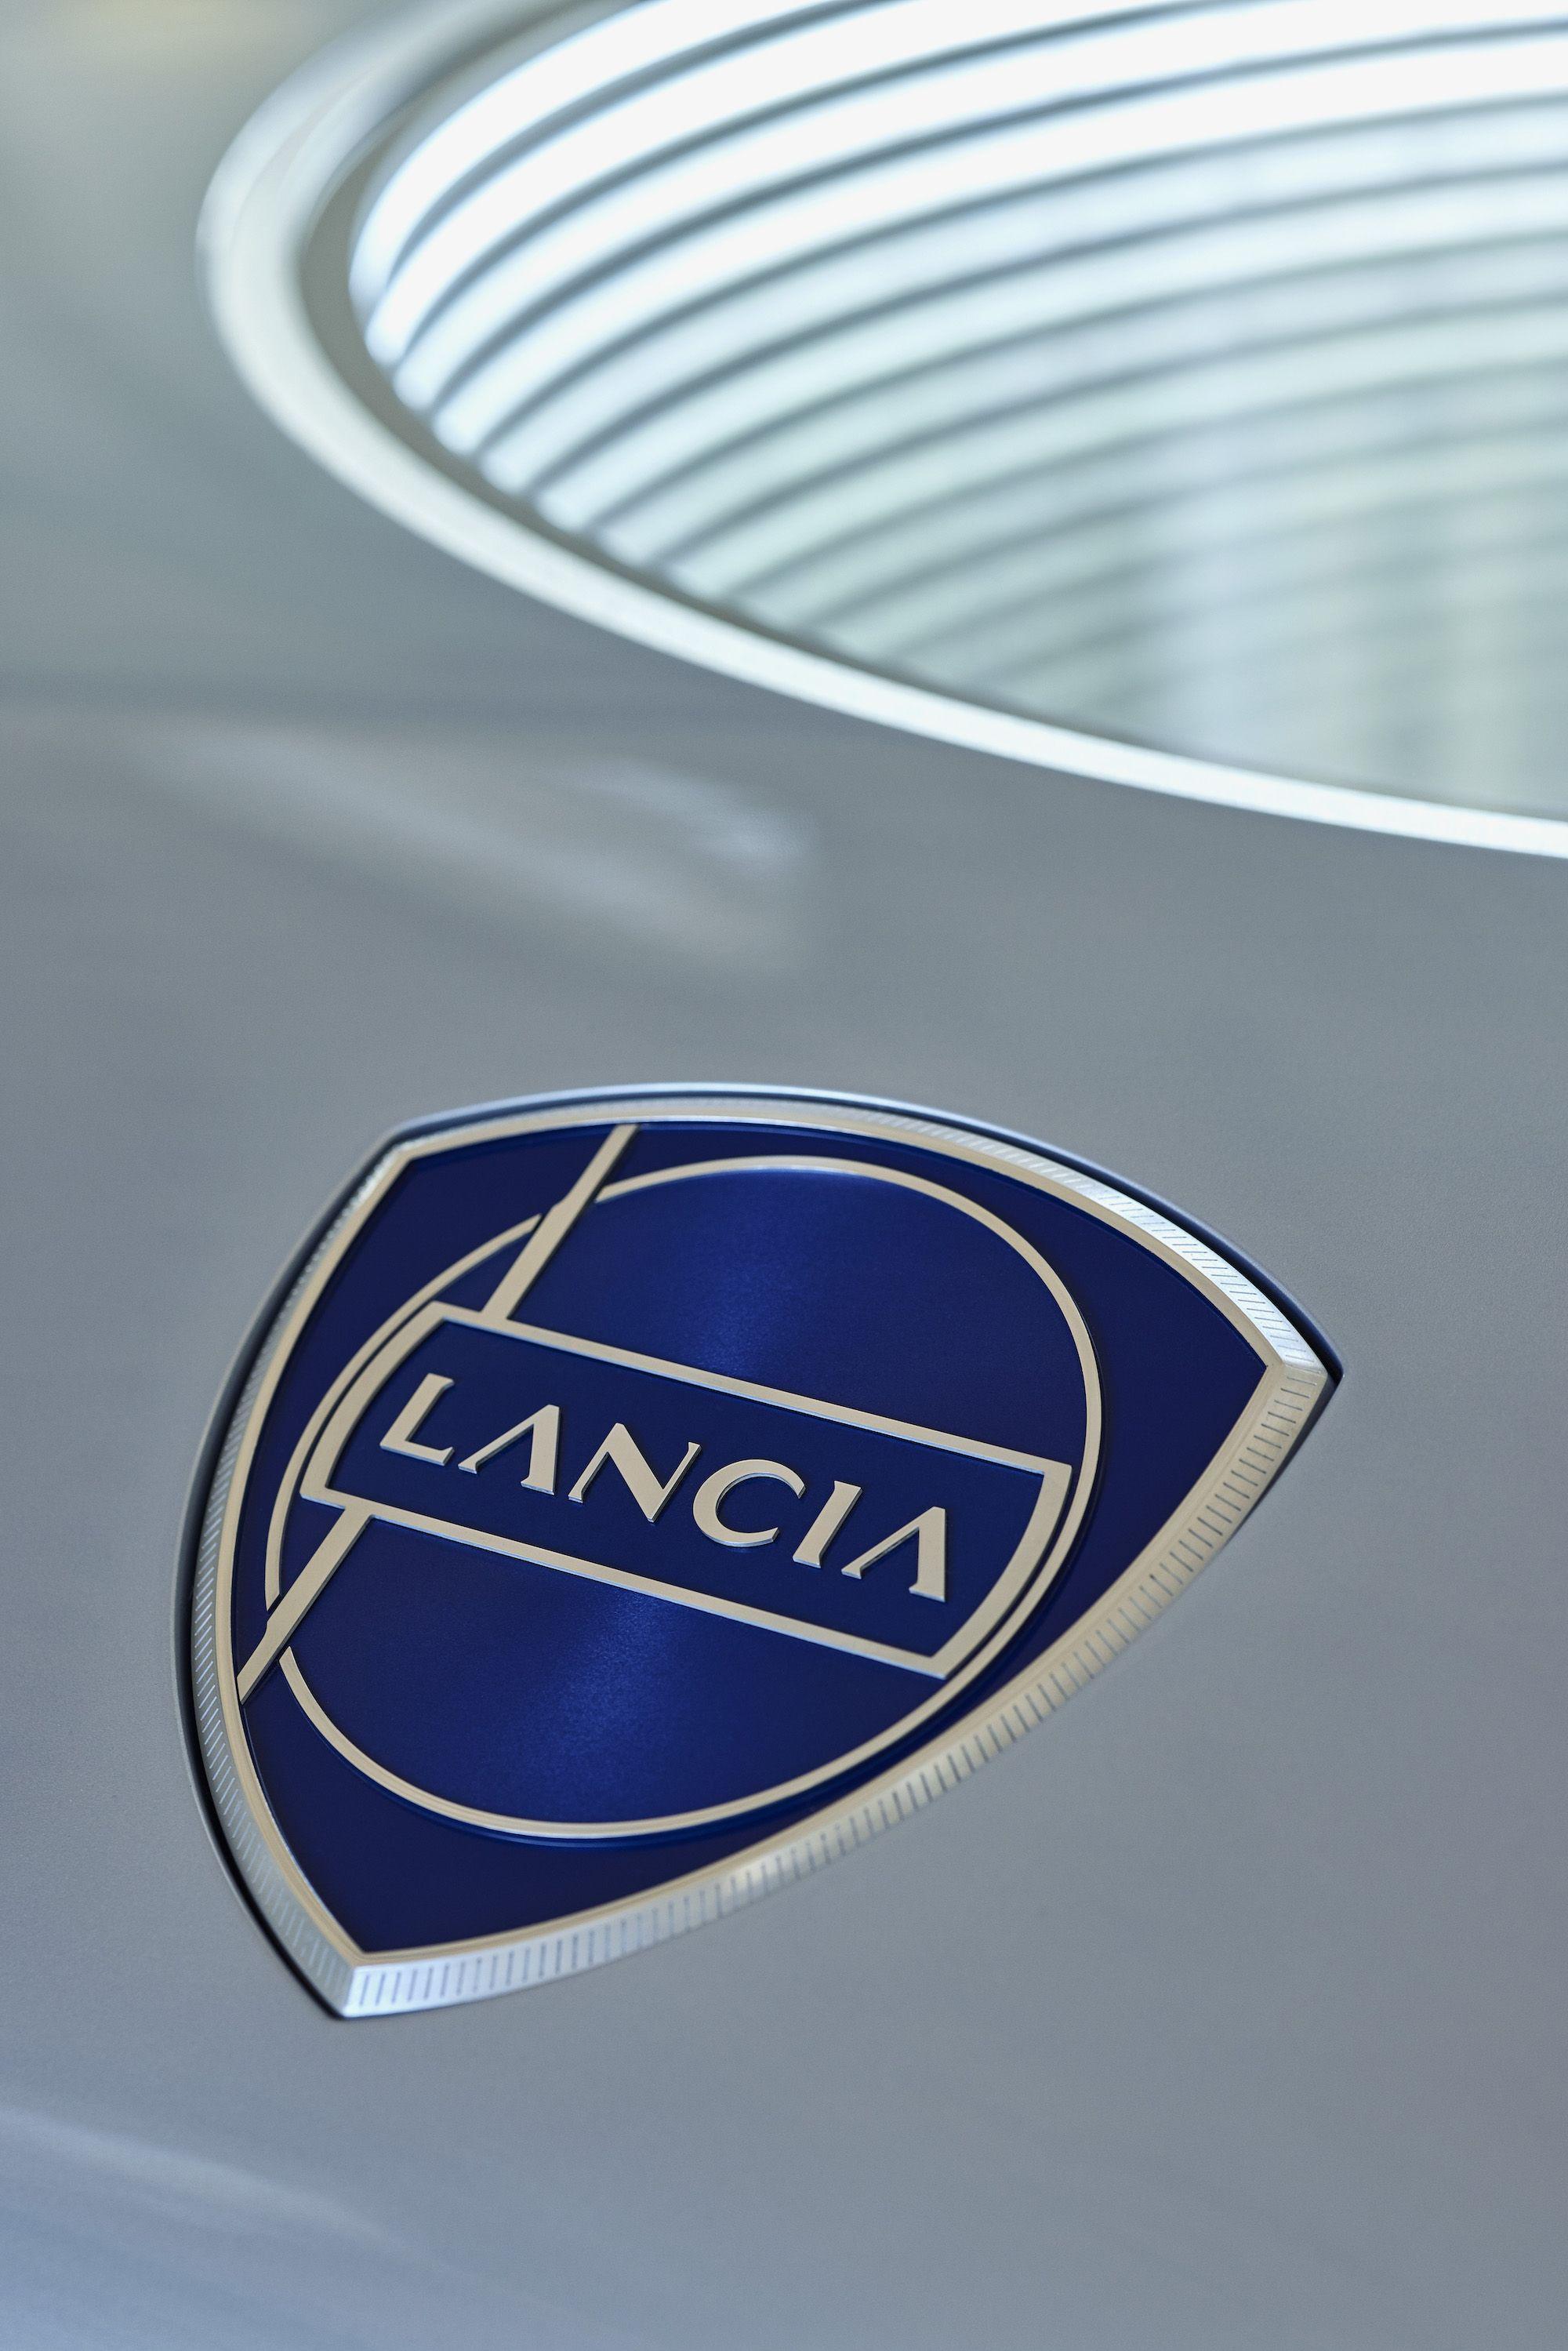 Lancia S New Concept Car Isn T Really A